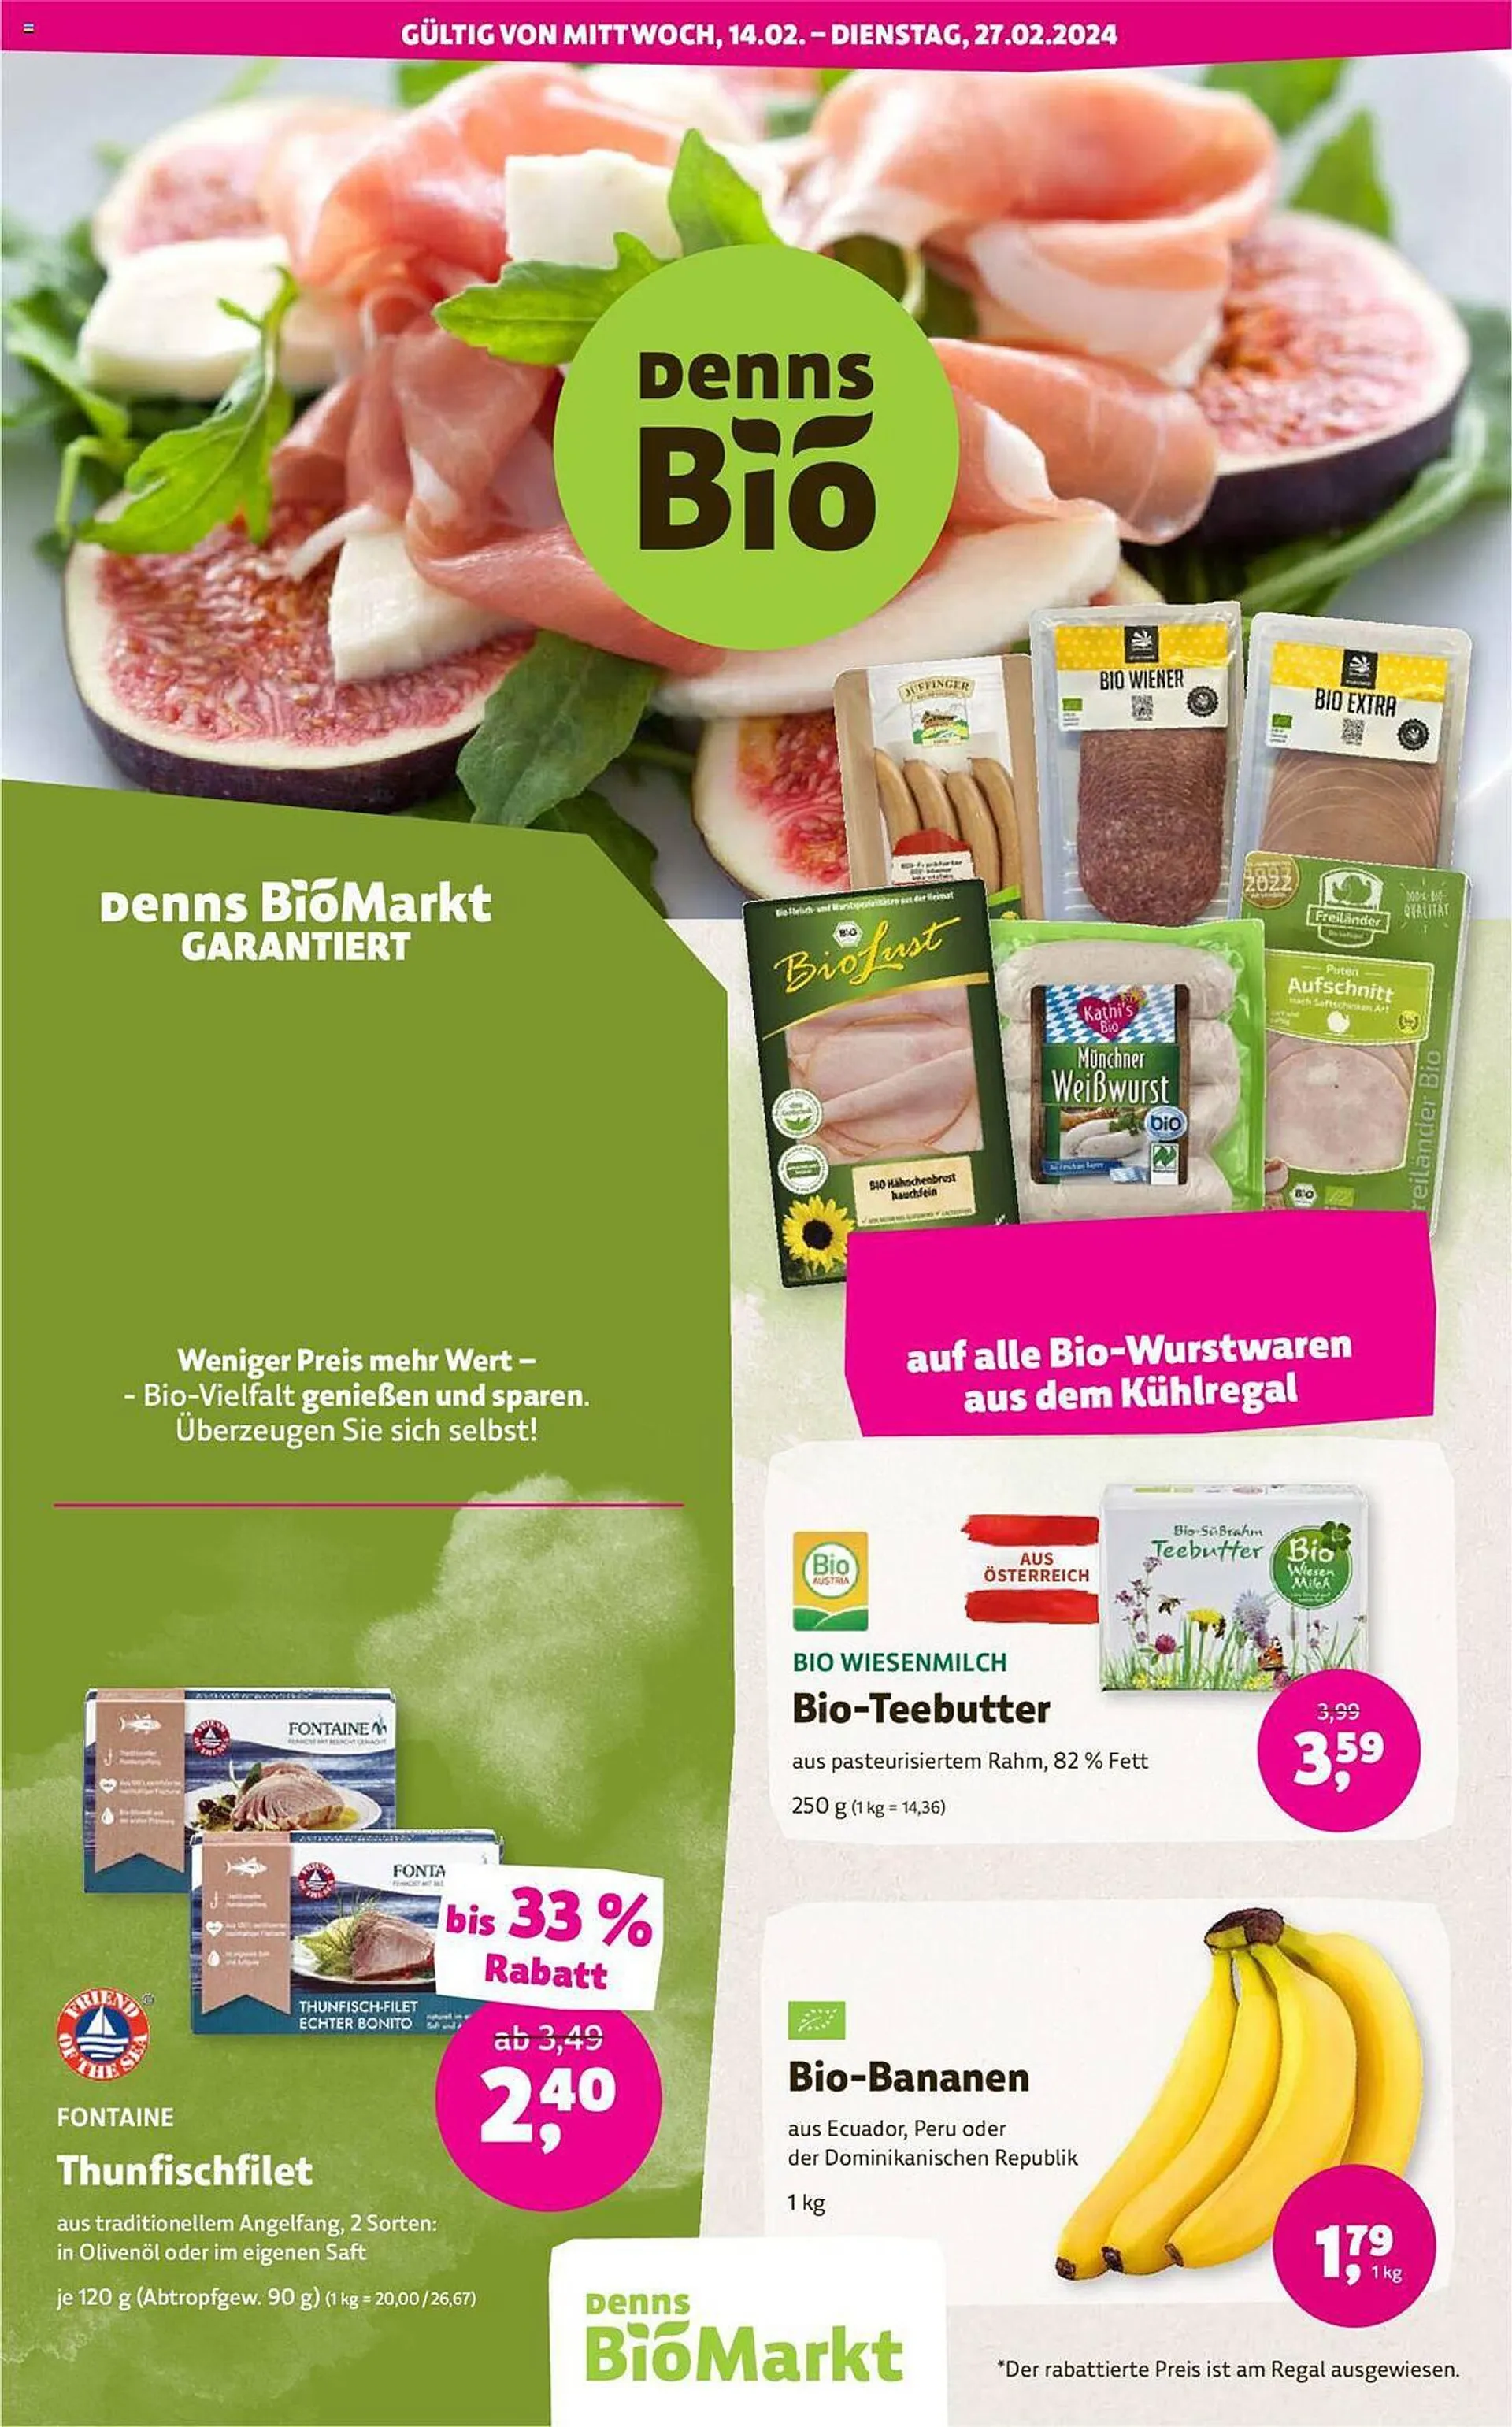 Denn's Biomarkt Flugblatt von 14. Februar bis 27. Februar 2024 - Flugblätt seite  